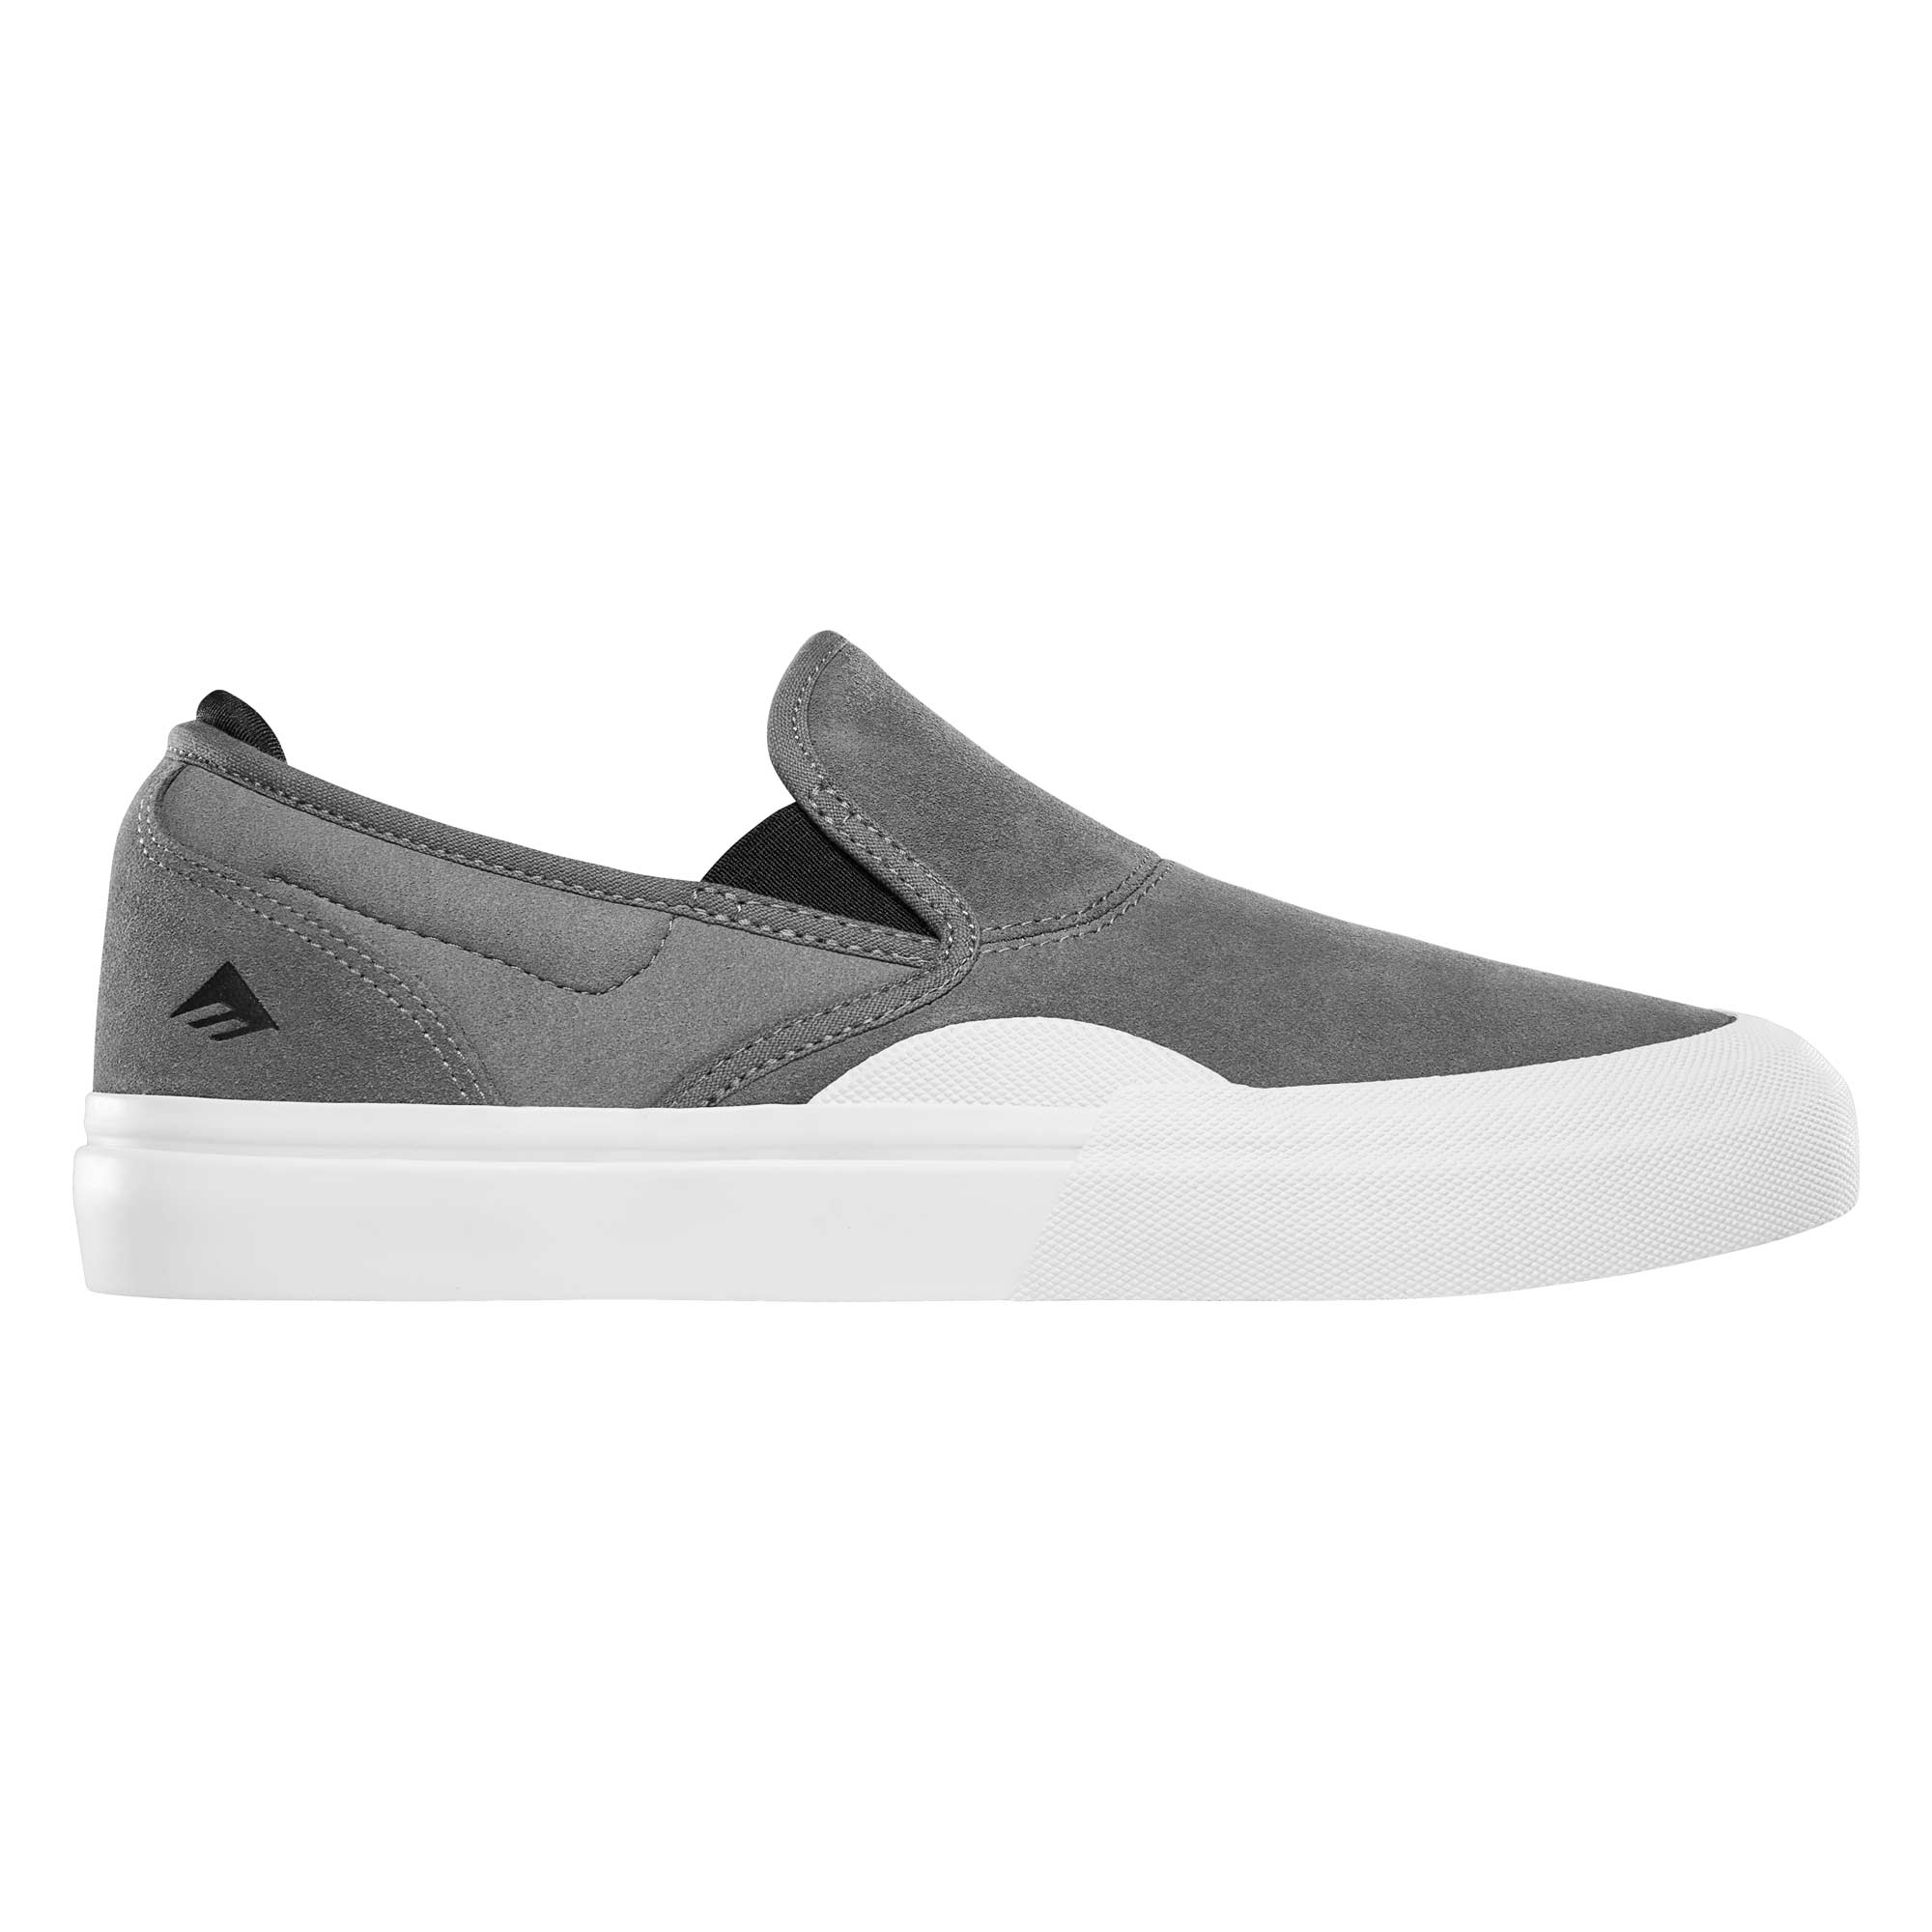 EMERICA Shoe WINO G6 SLIP-ON gry/bla/whi, grey/black/white